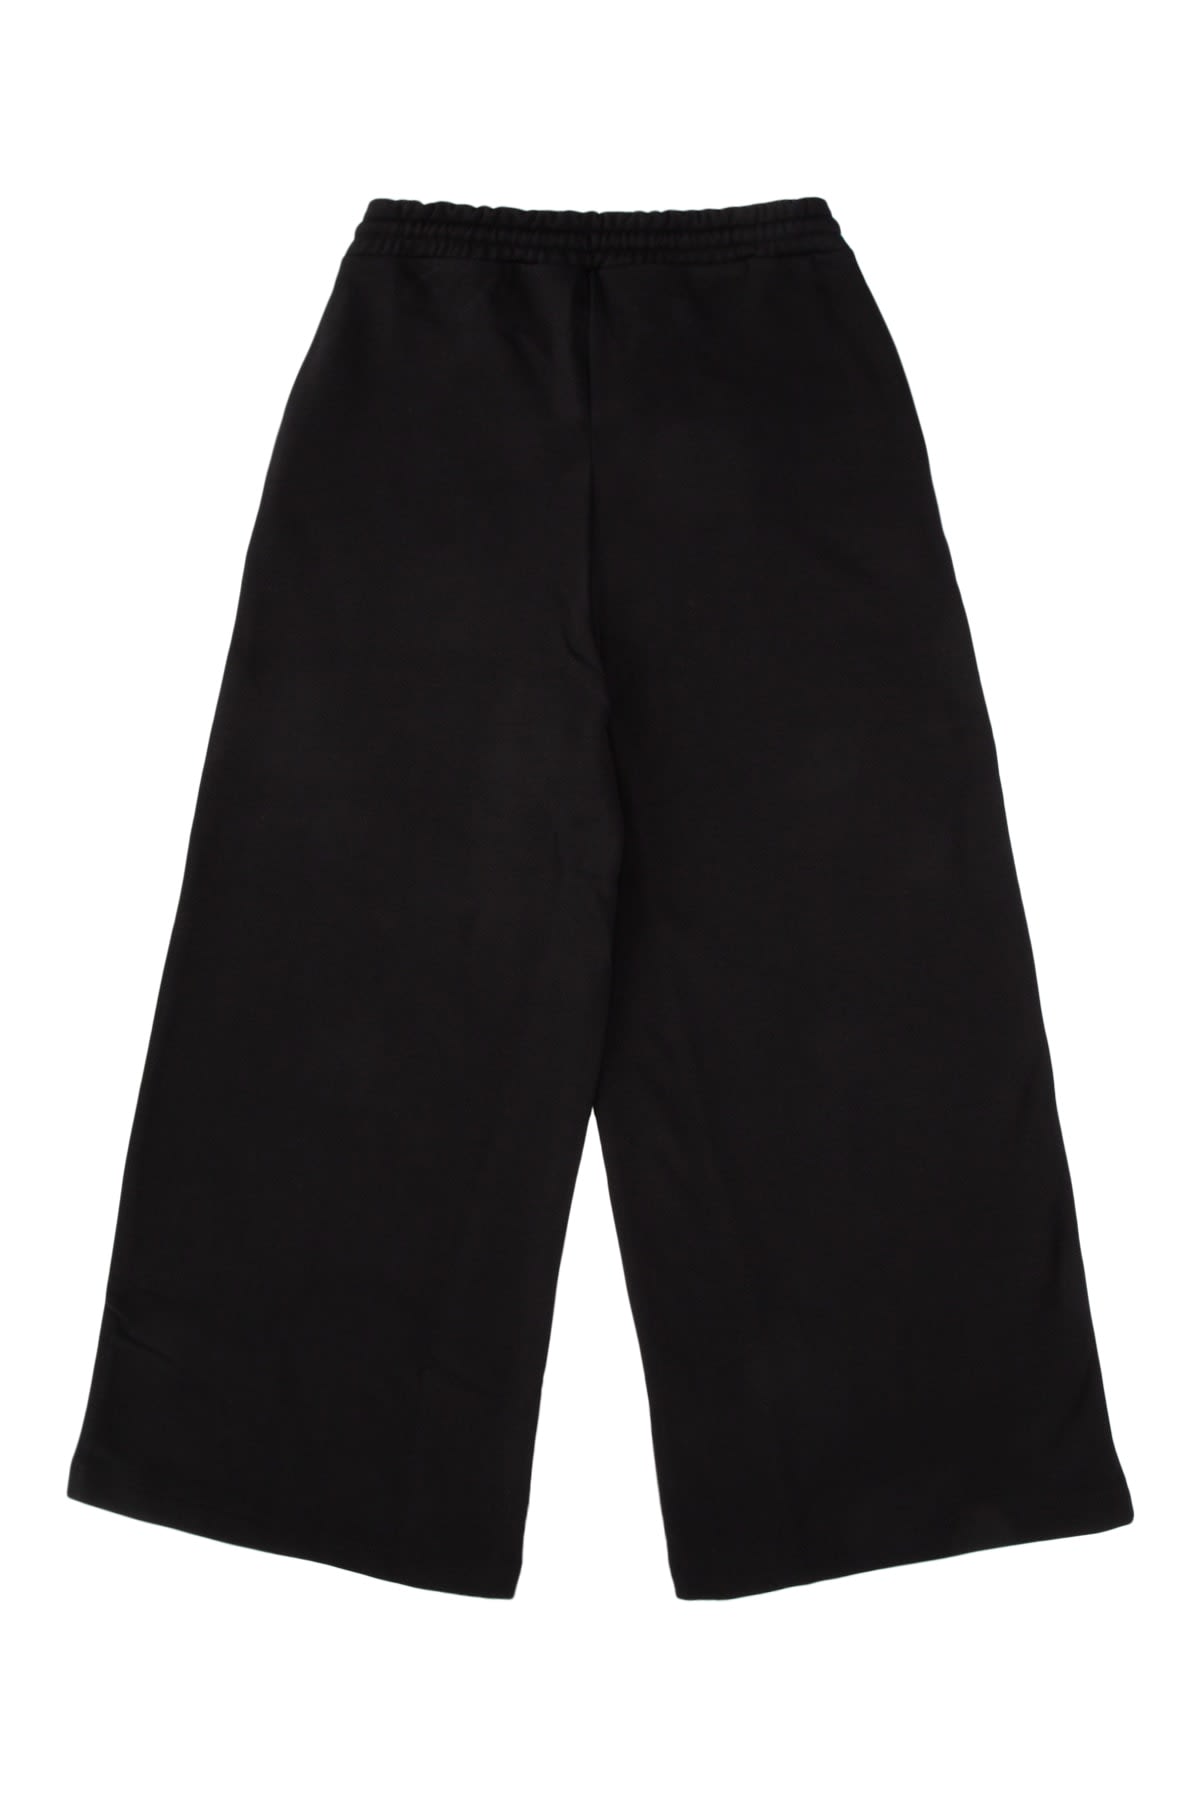 Marni Kids' Pantalone In 0m900